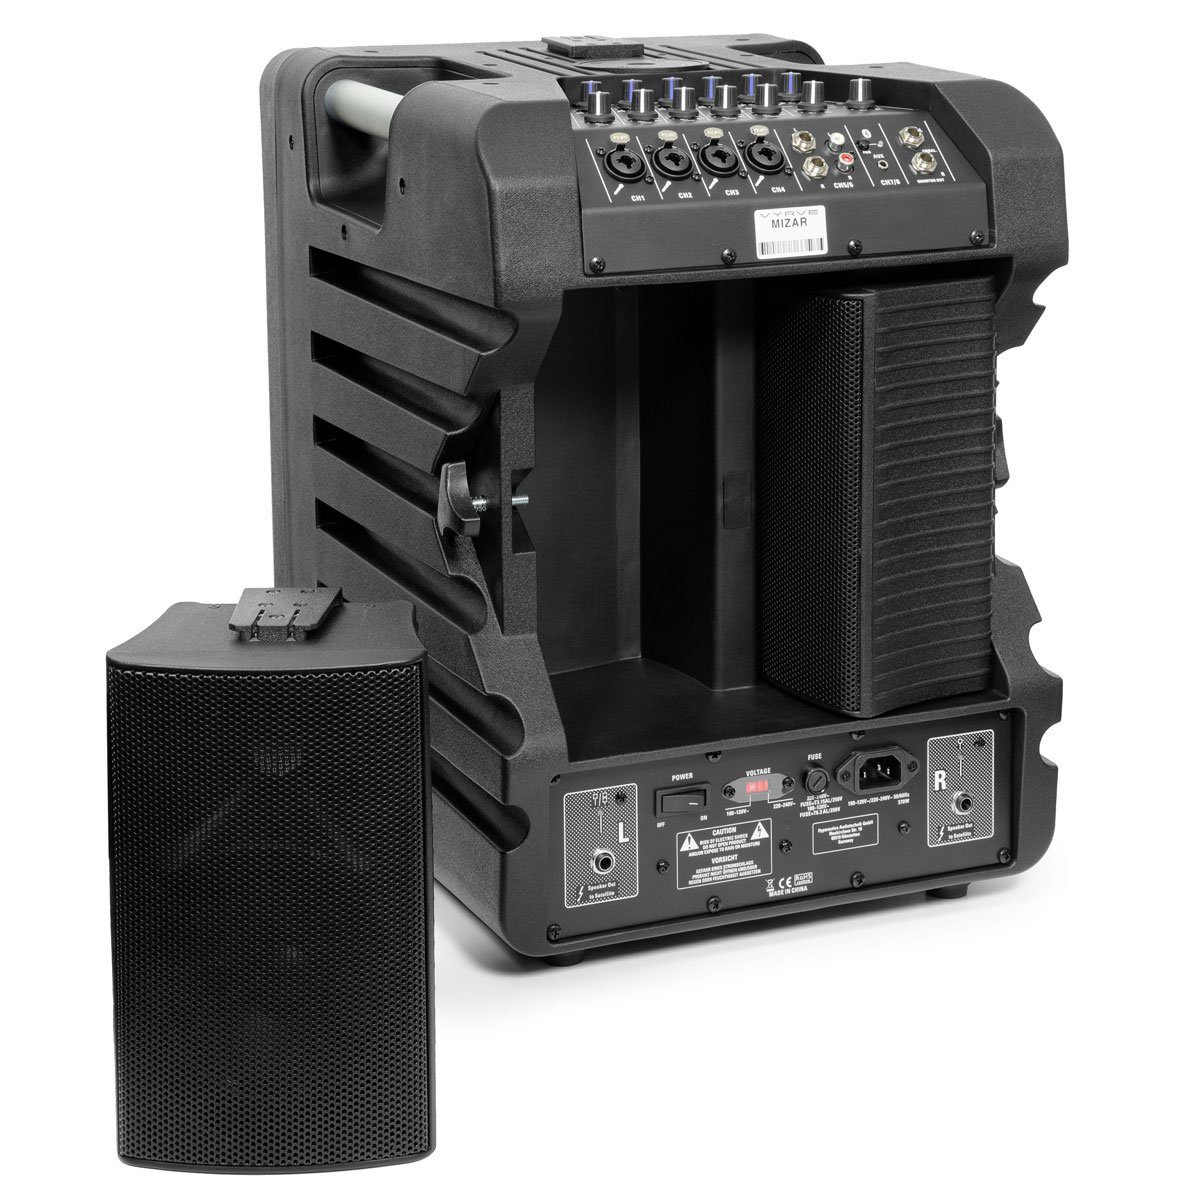 MIZAR Vyrve Mixer Stativen Audio Lautsprechersystem Audio PA-System mit Vyrve und